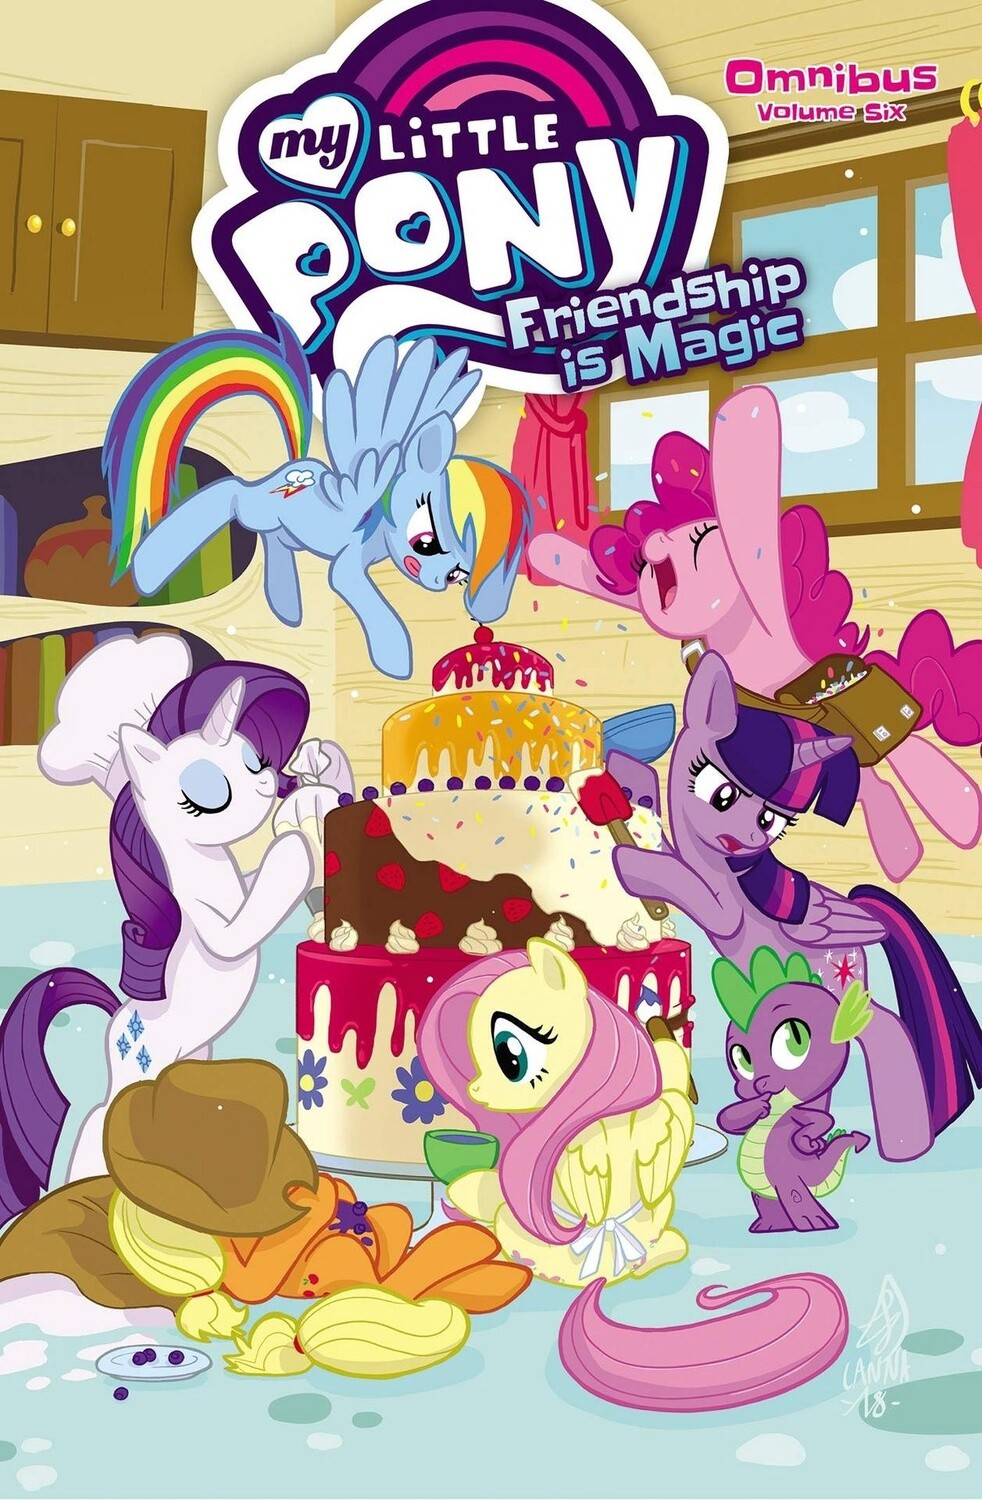 My Little Pony: Friendship is Magic Omnibus Vol. 6